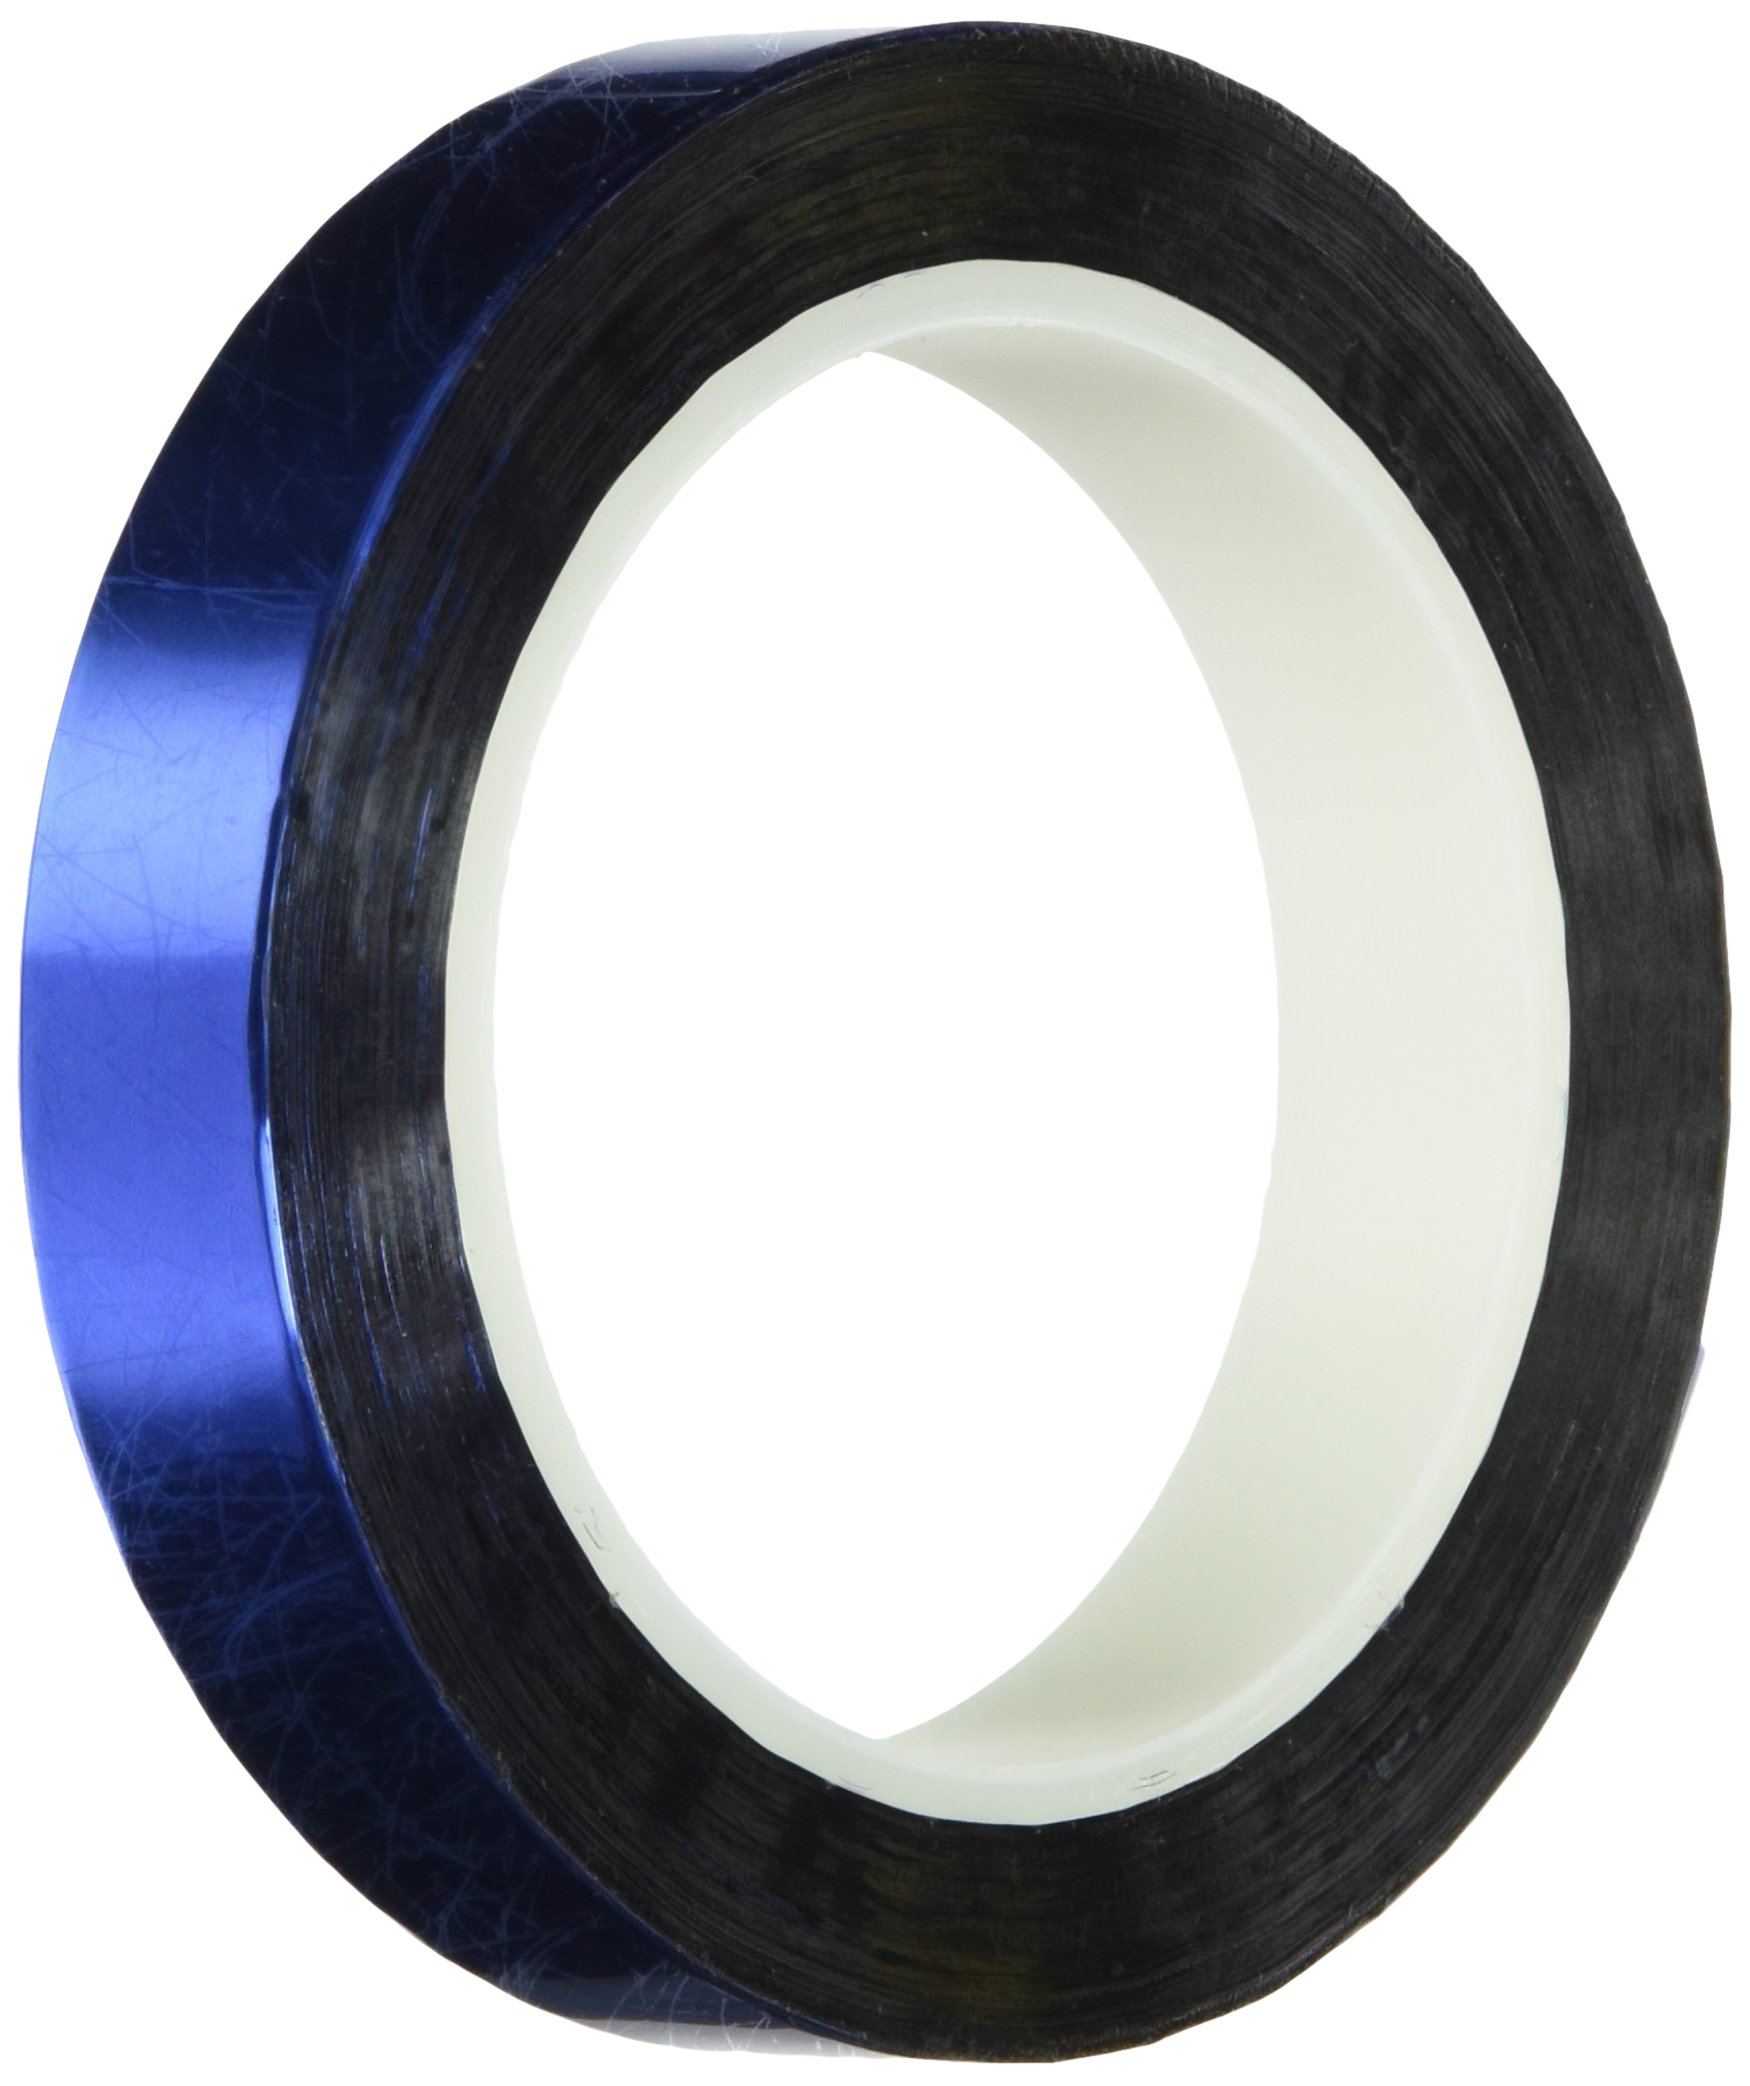 TapeCase 33-72-MPFT-Blue Metallisiertes Polyester-, Acryl-Klebeband, 0,005 cm dick, 65,8 m Länge, Breite: 83,8 cm, Blau, 1 Rolle